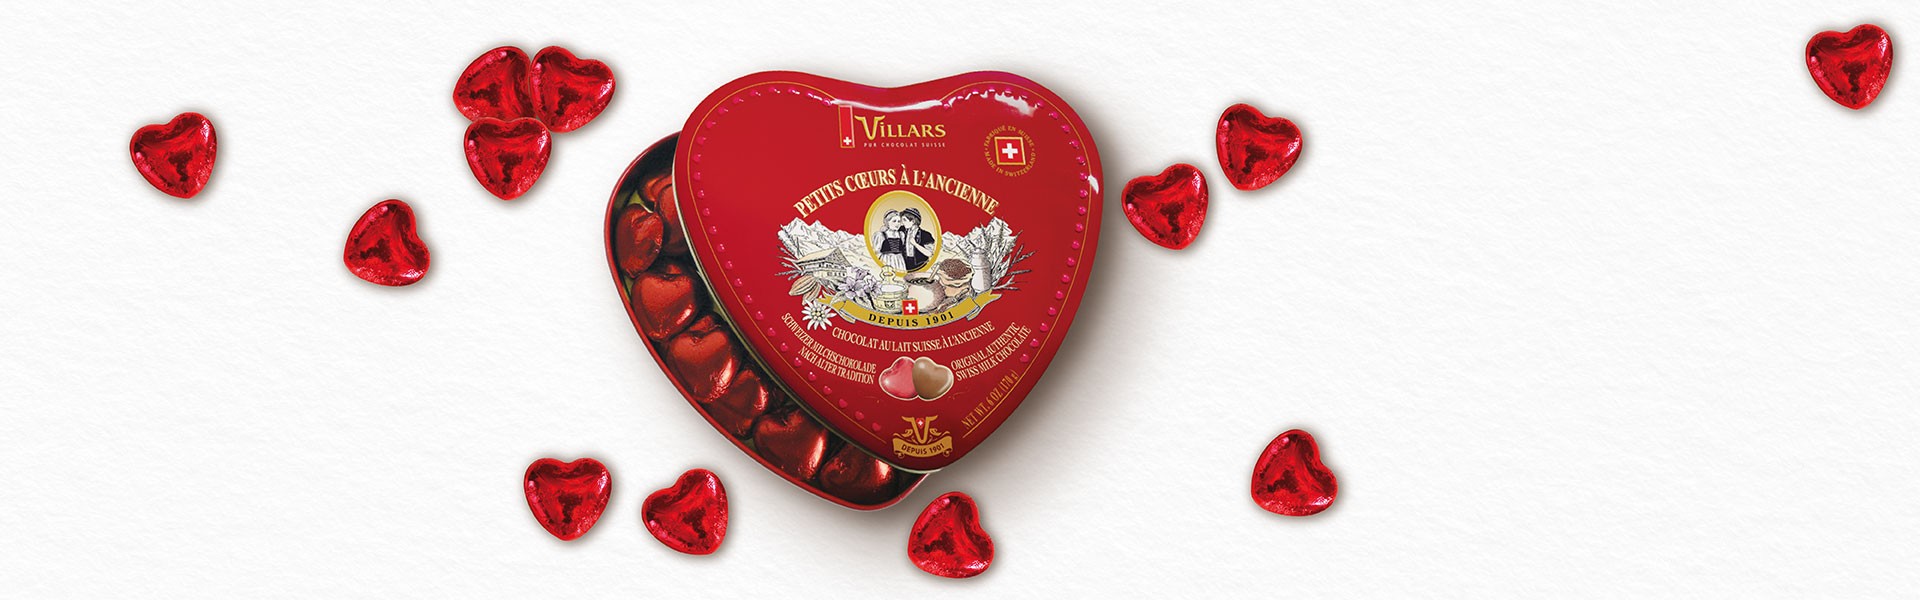 Chocolat Villars boite coeur